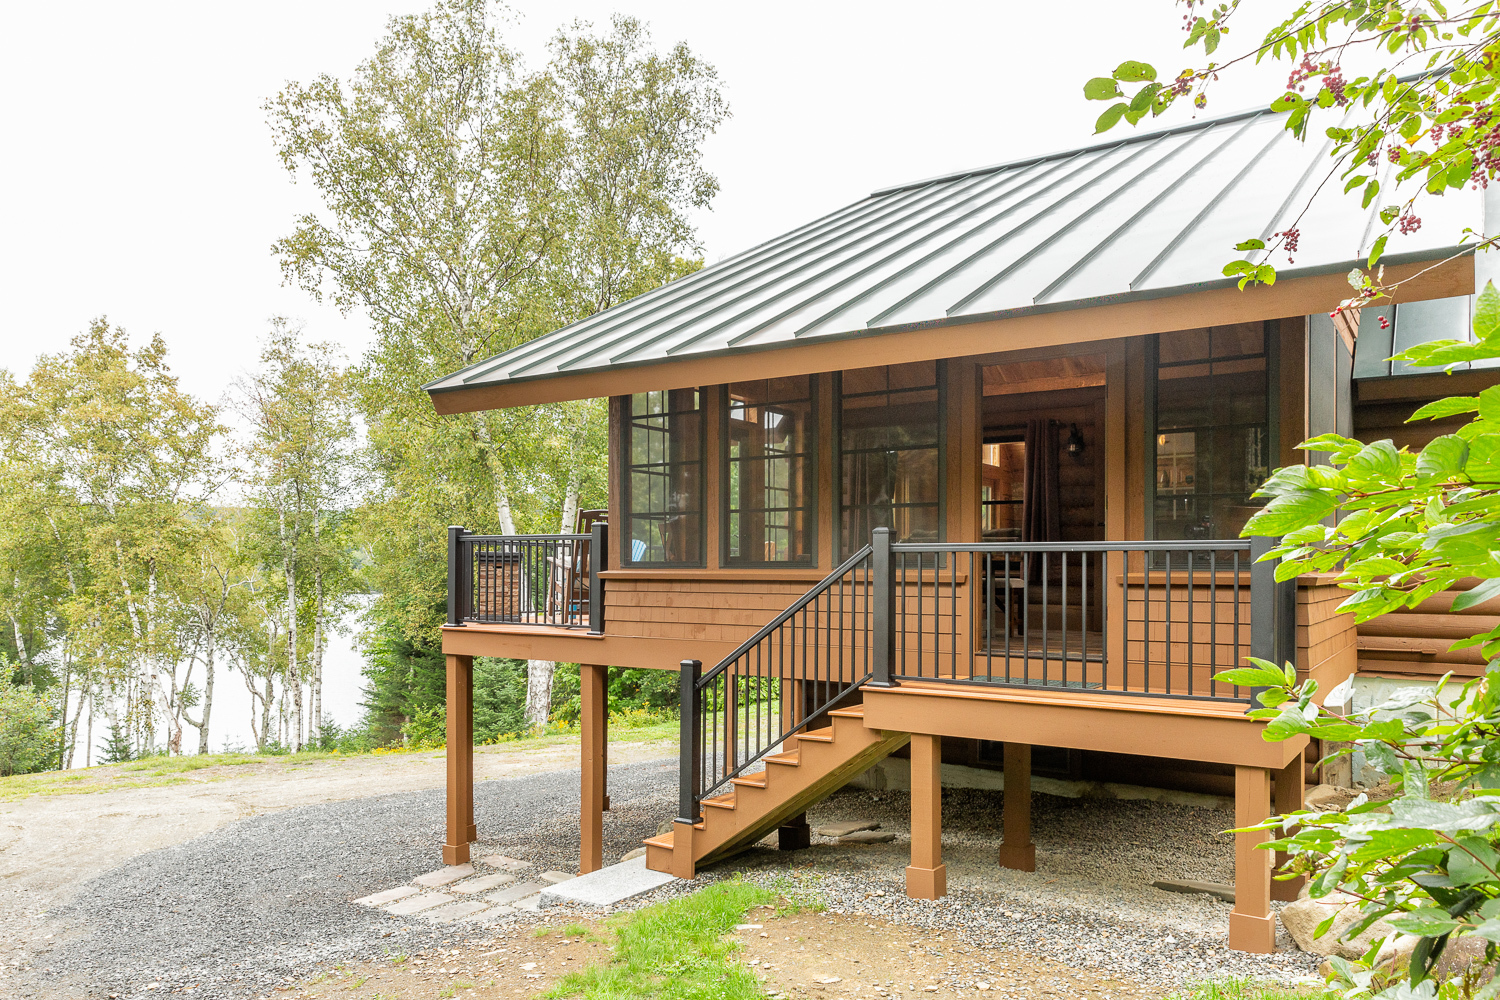 Three-season porch addition to an existing lakehouse